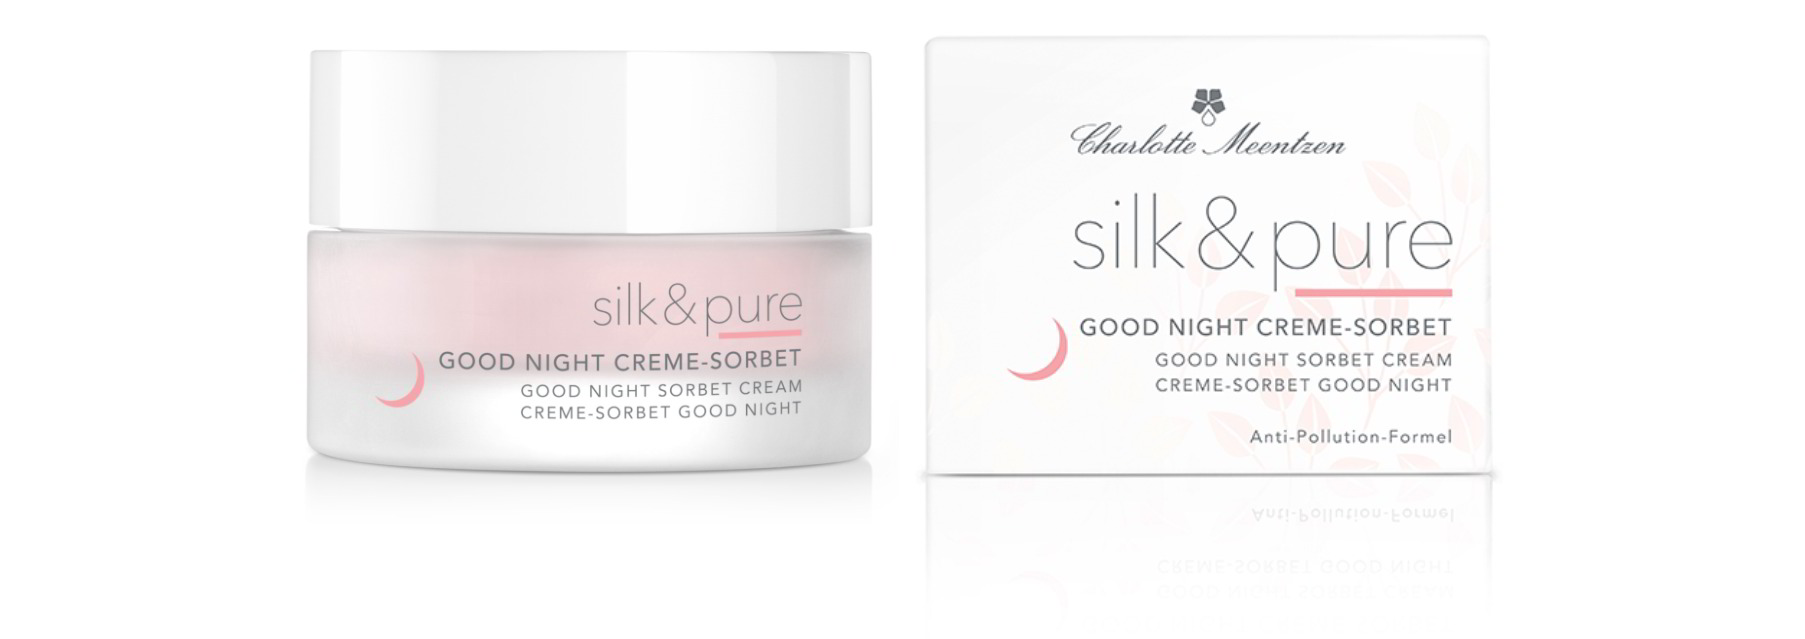 Silk & Pure Good Night Creme-Sorbet